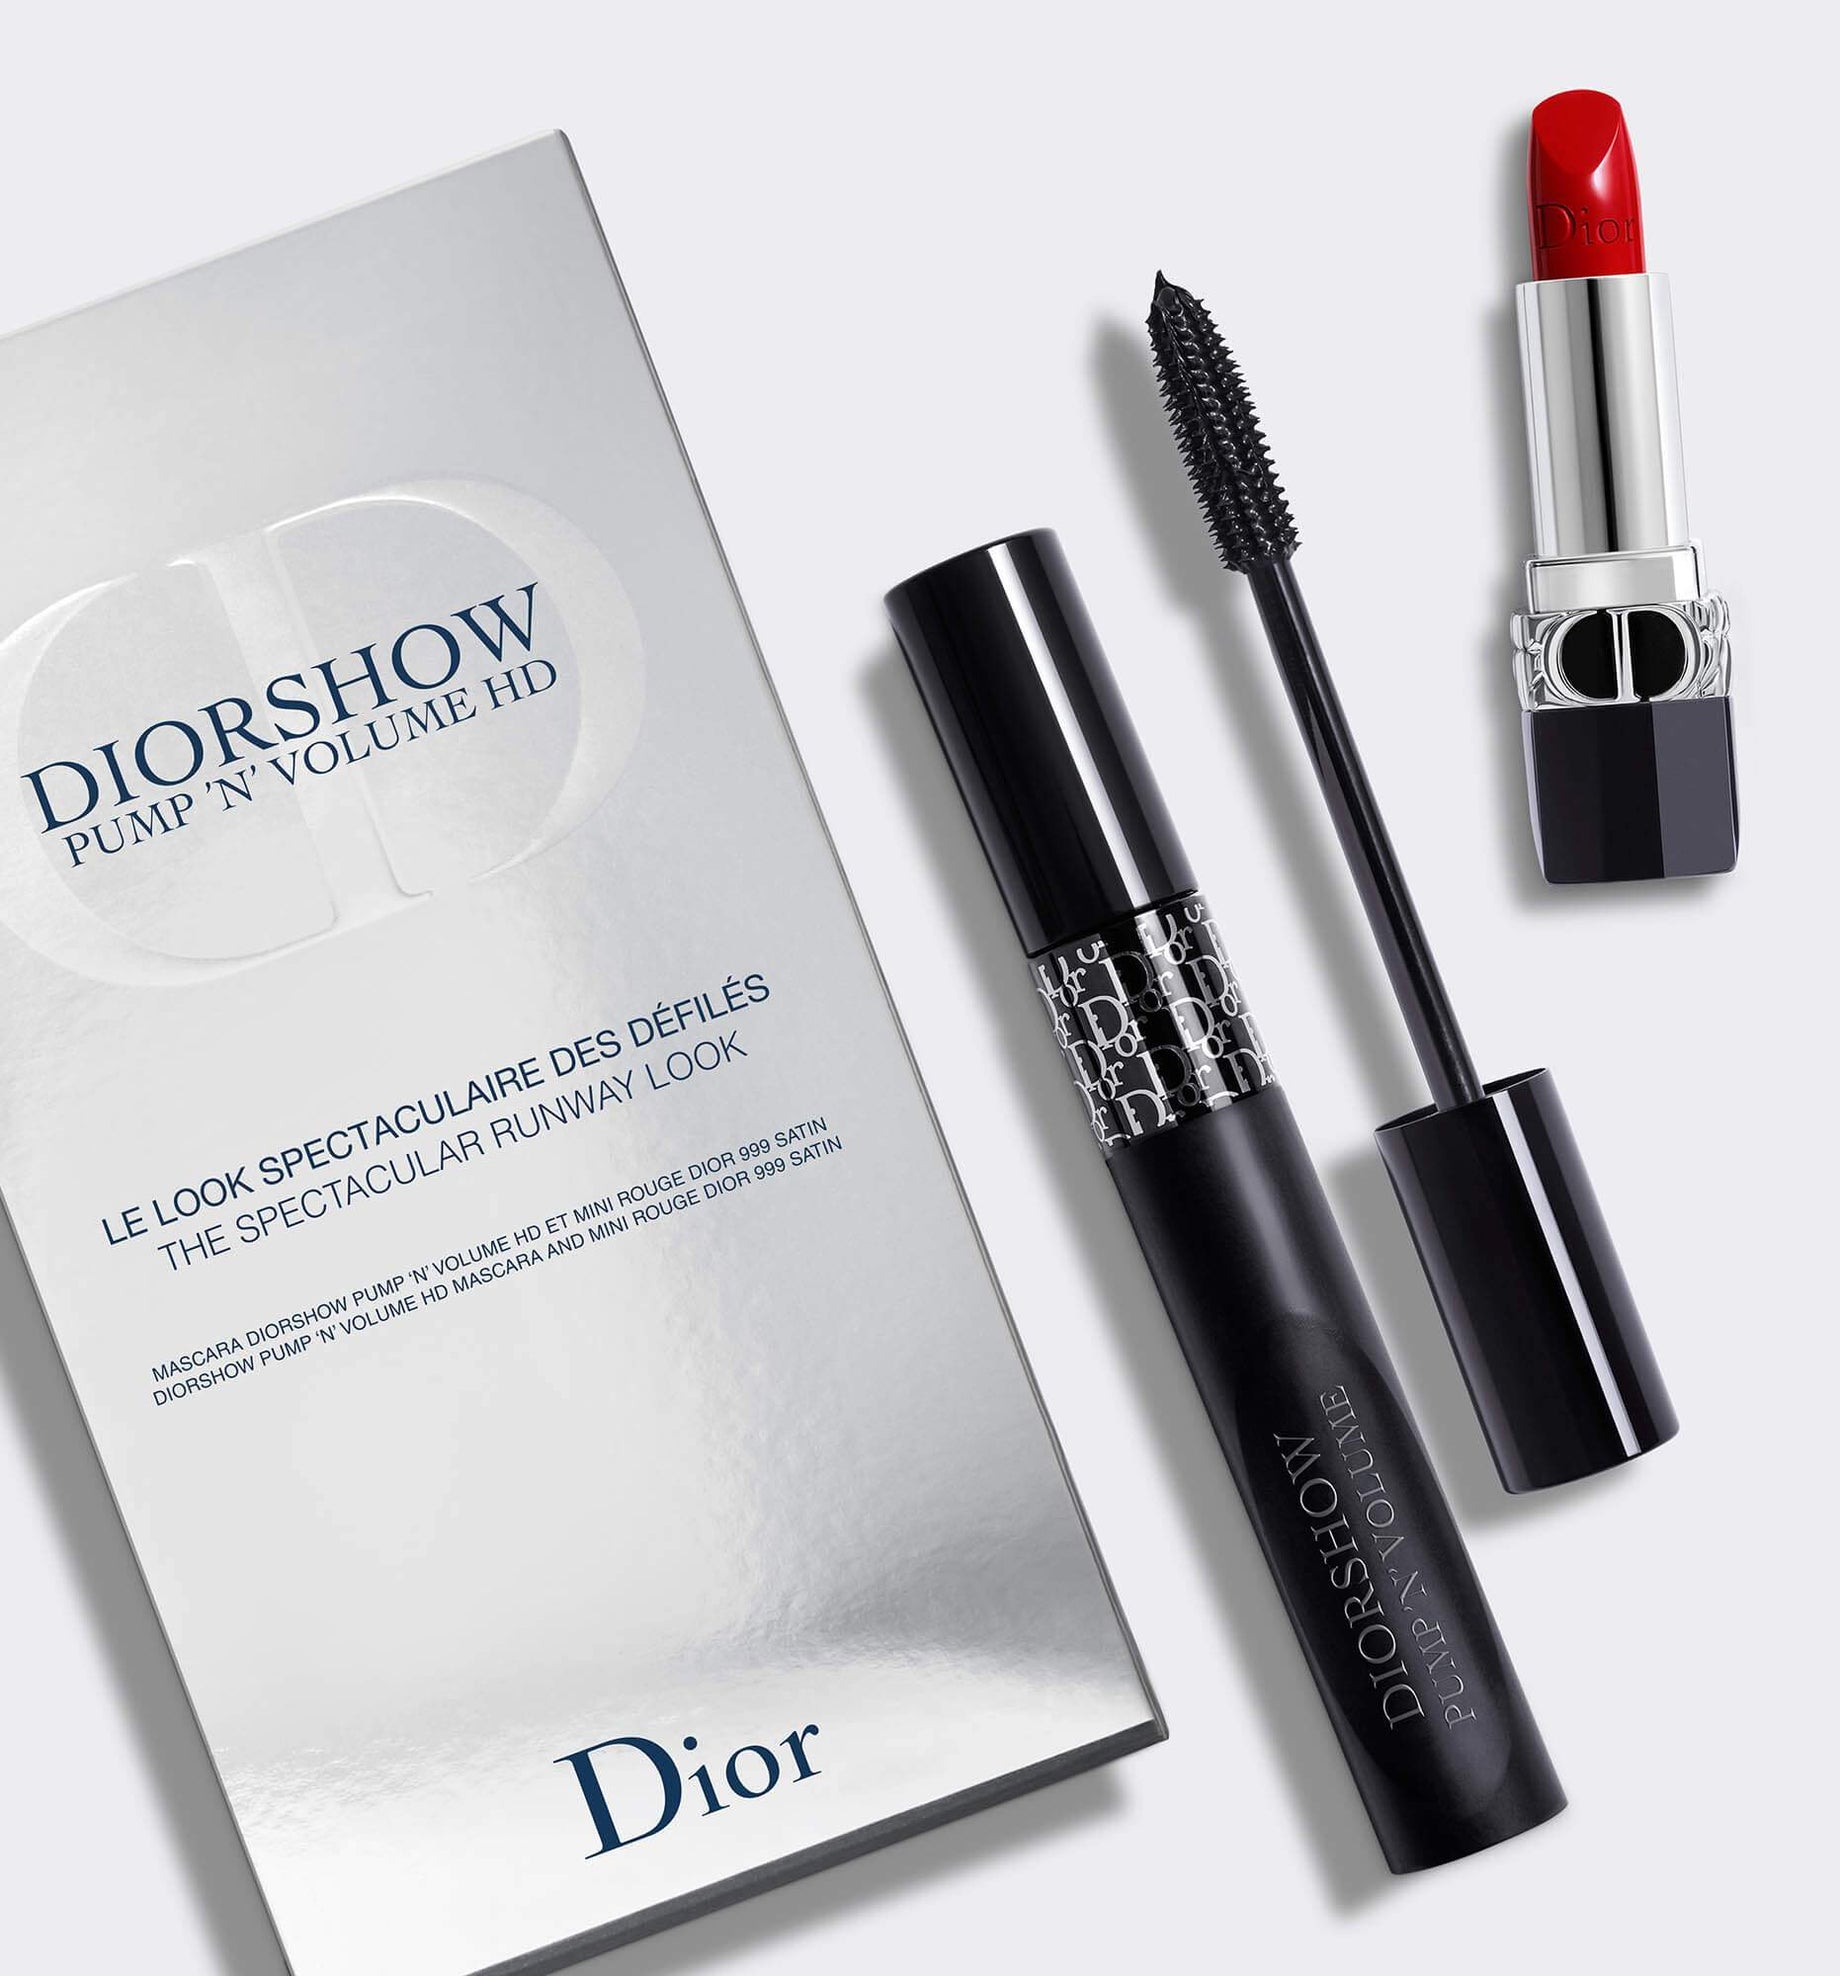 Diorshow Pump 'N' Volume HDMascara and Lipstick Set